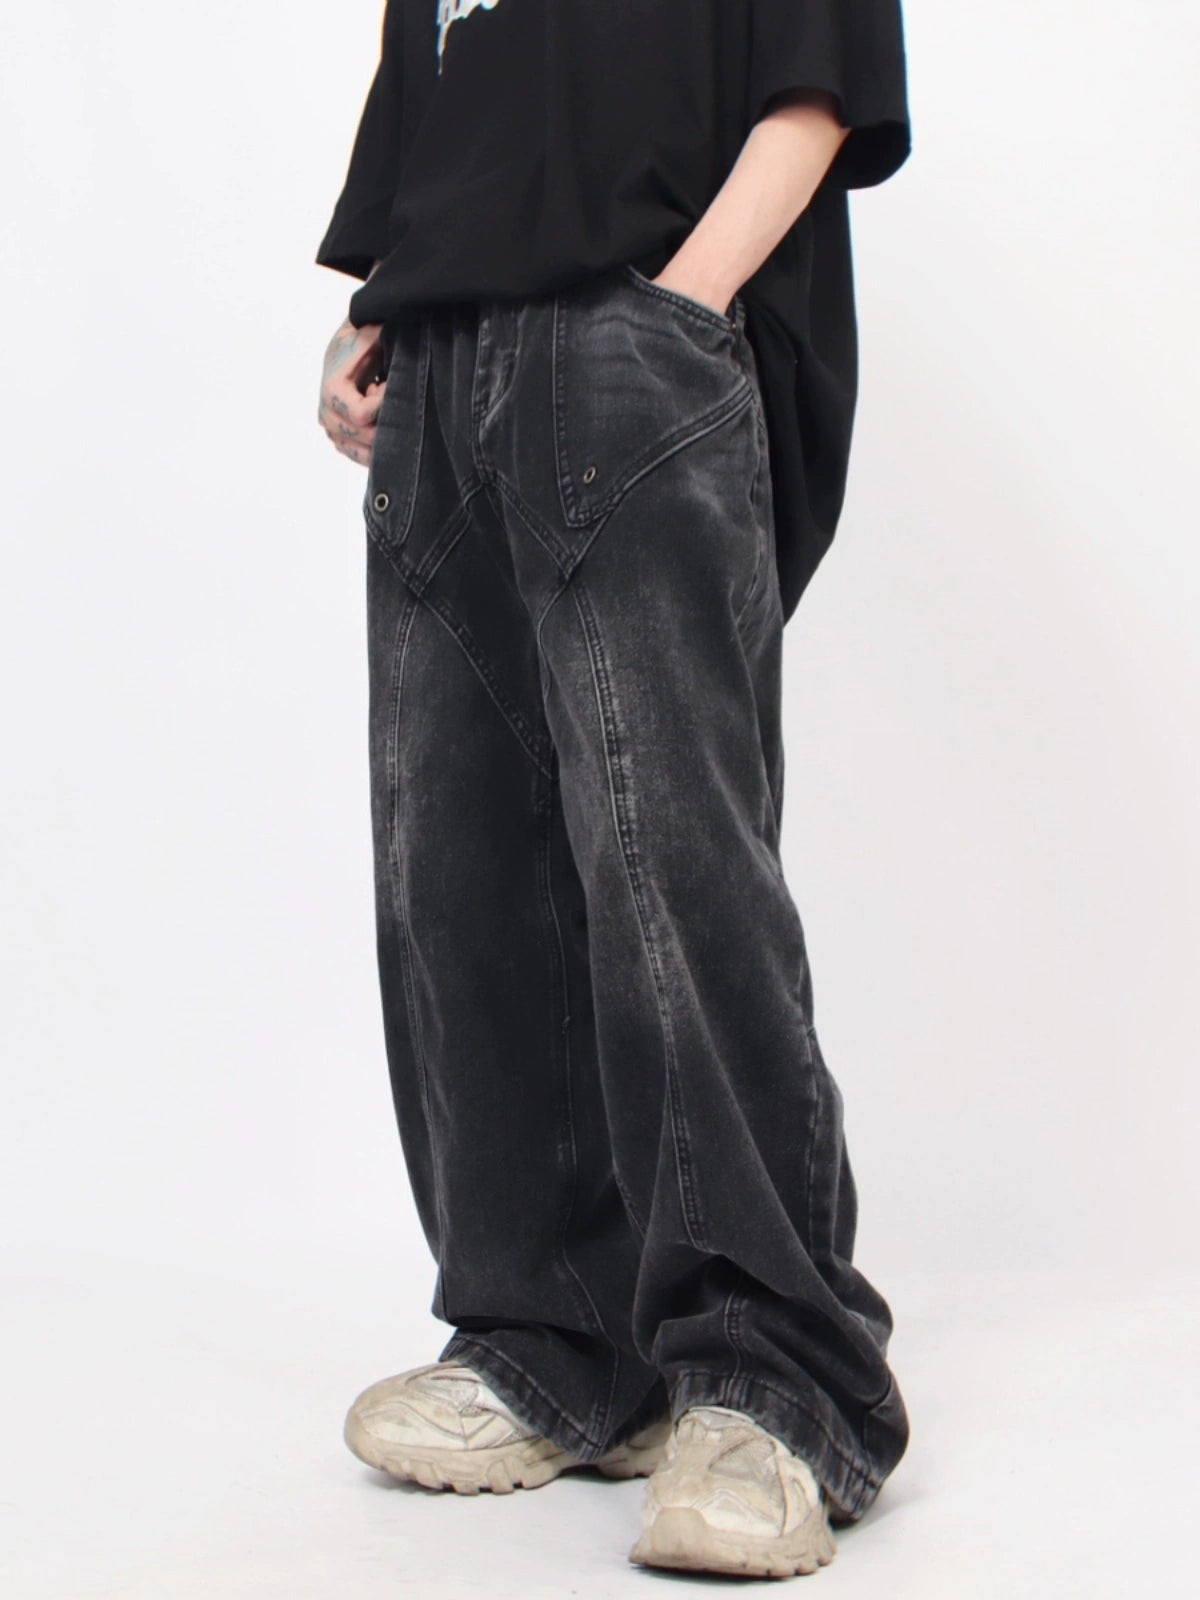 Highstreet Design Sense Trousers Zipper Open Jeans Men's Retro